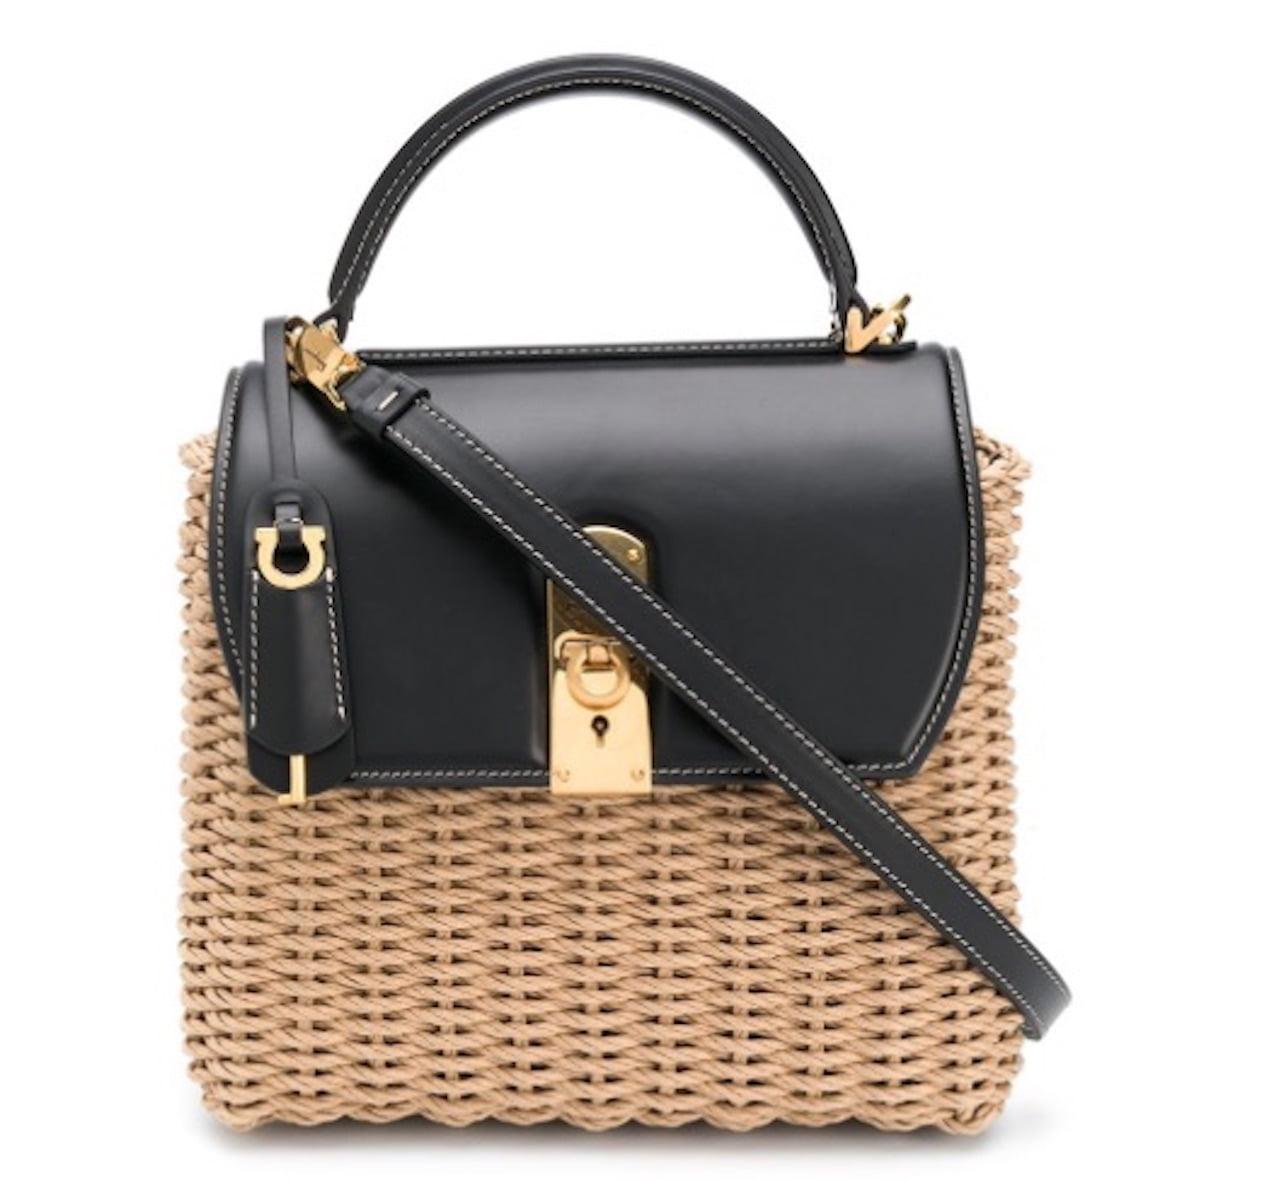 HERMÈS is no longer out of reach! 4 “entry-level” HERMÈS handbags to  splurge on